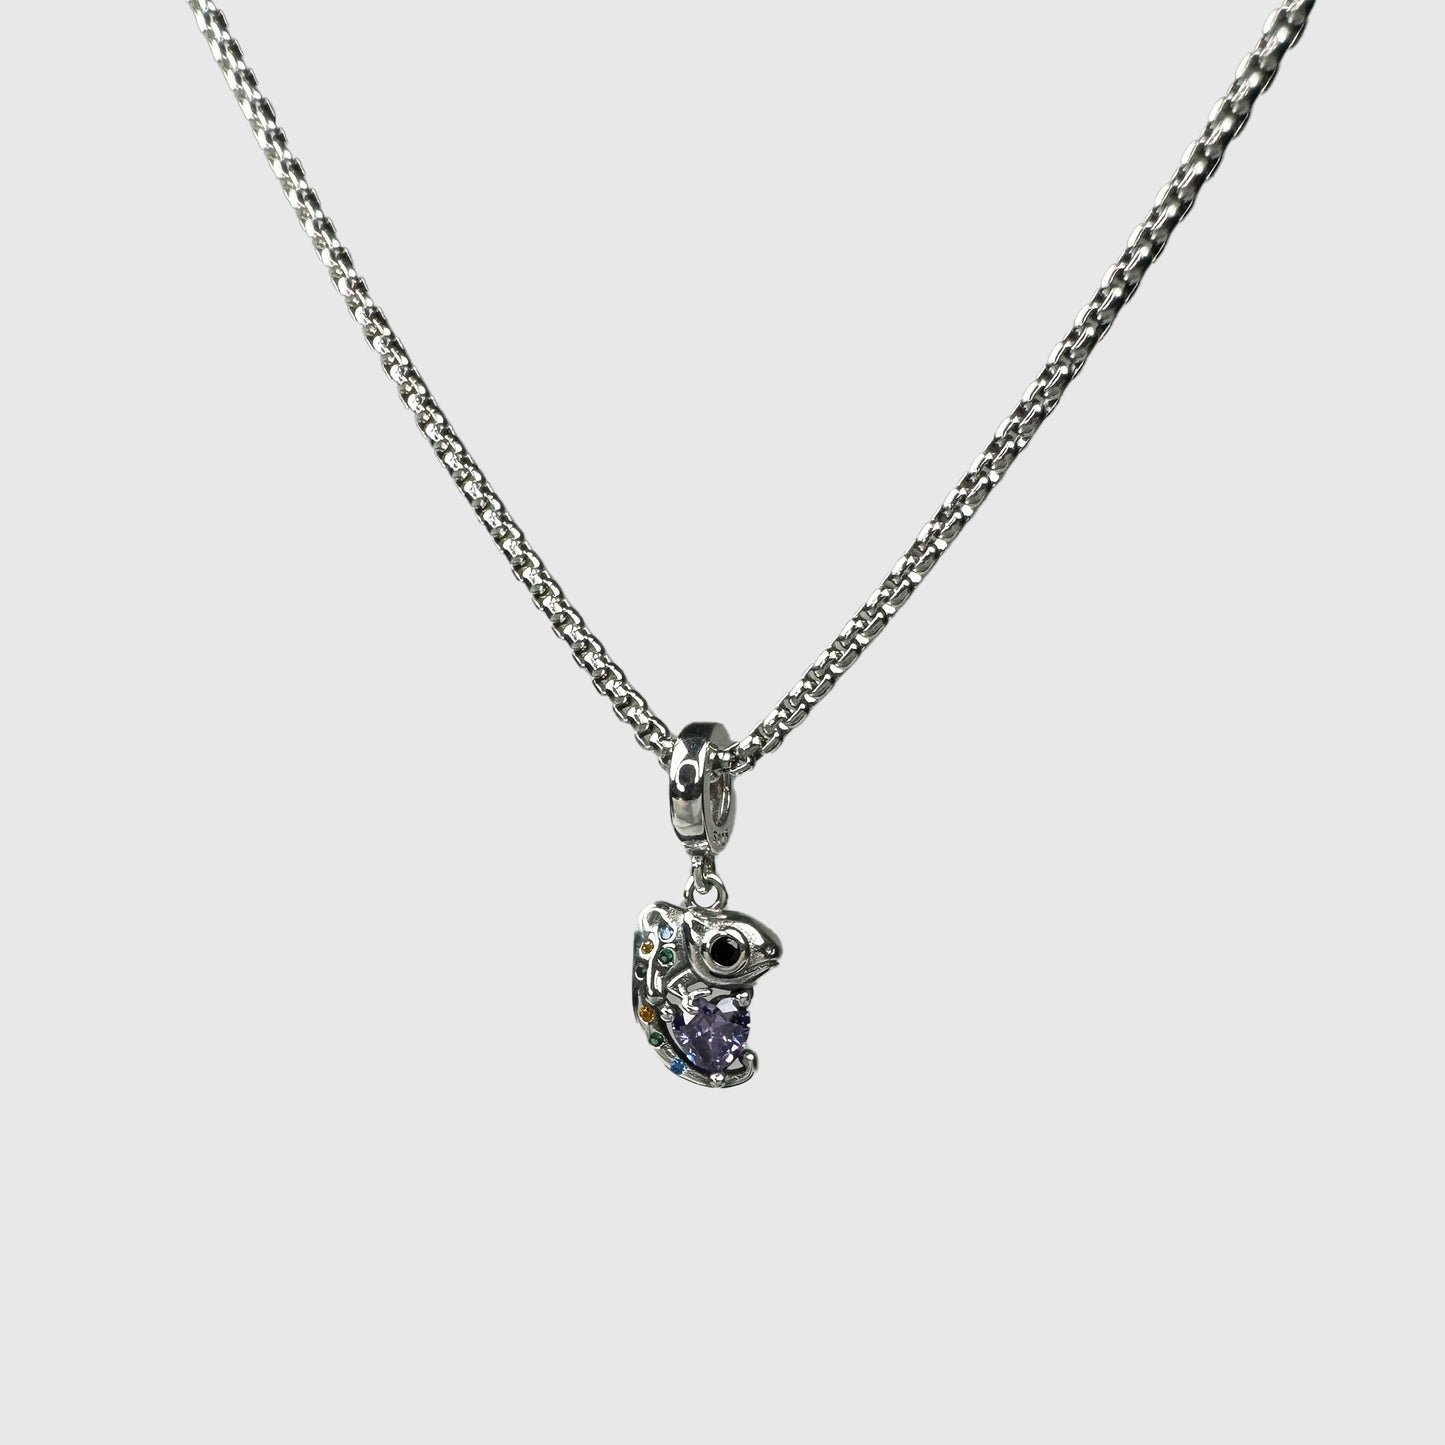 Colorful Gemstones Silver Chameleon Pendant Necklace